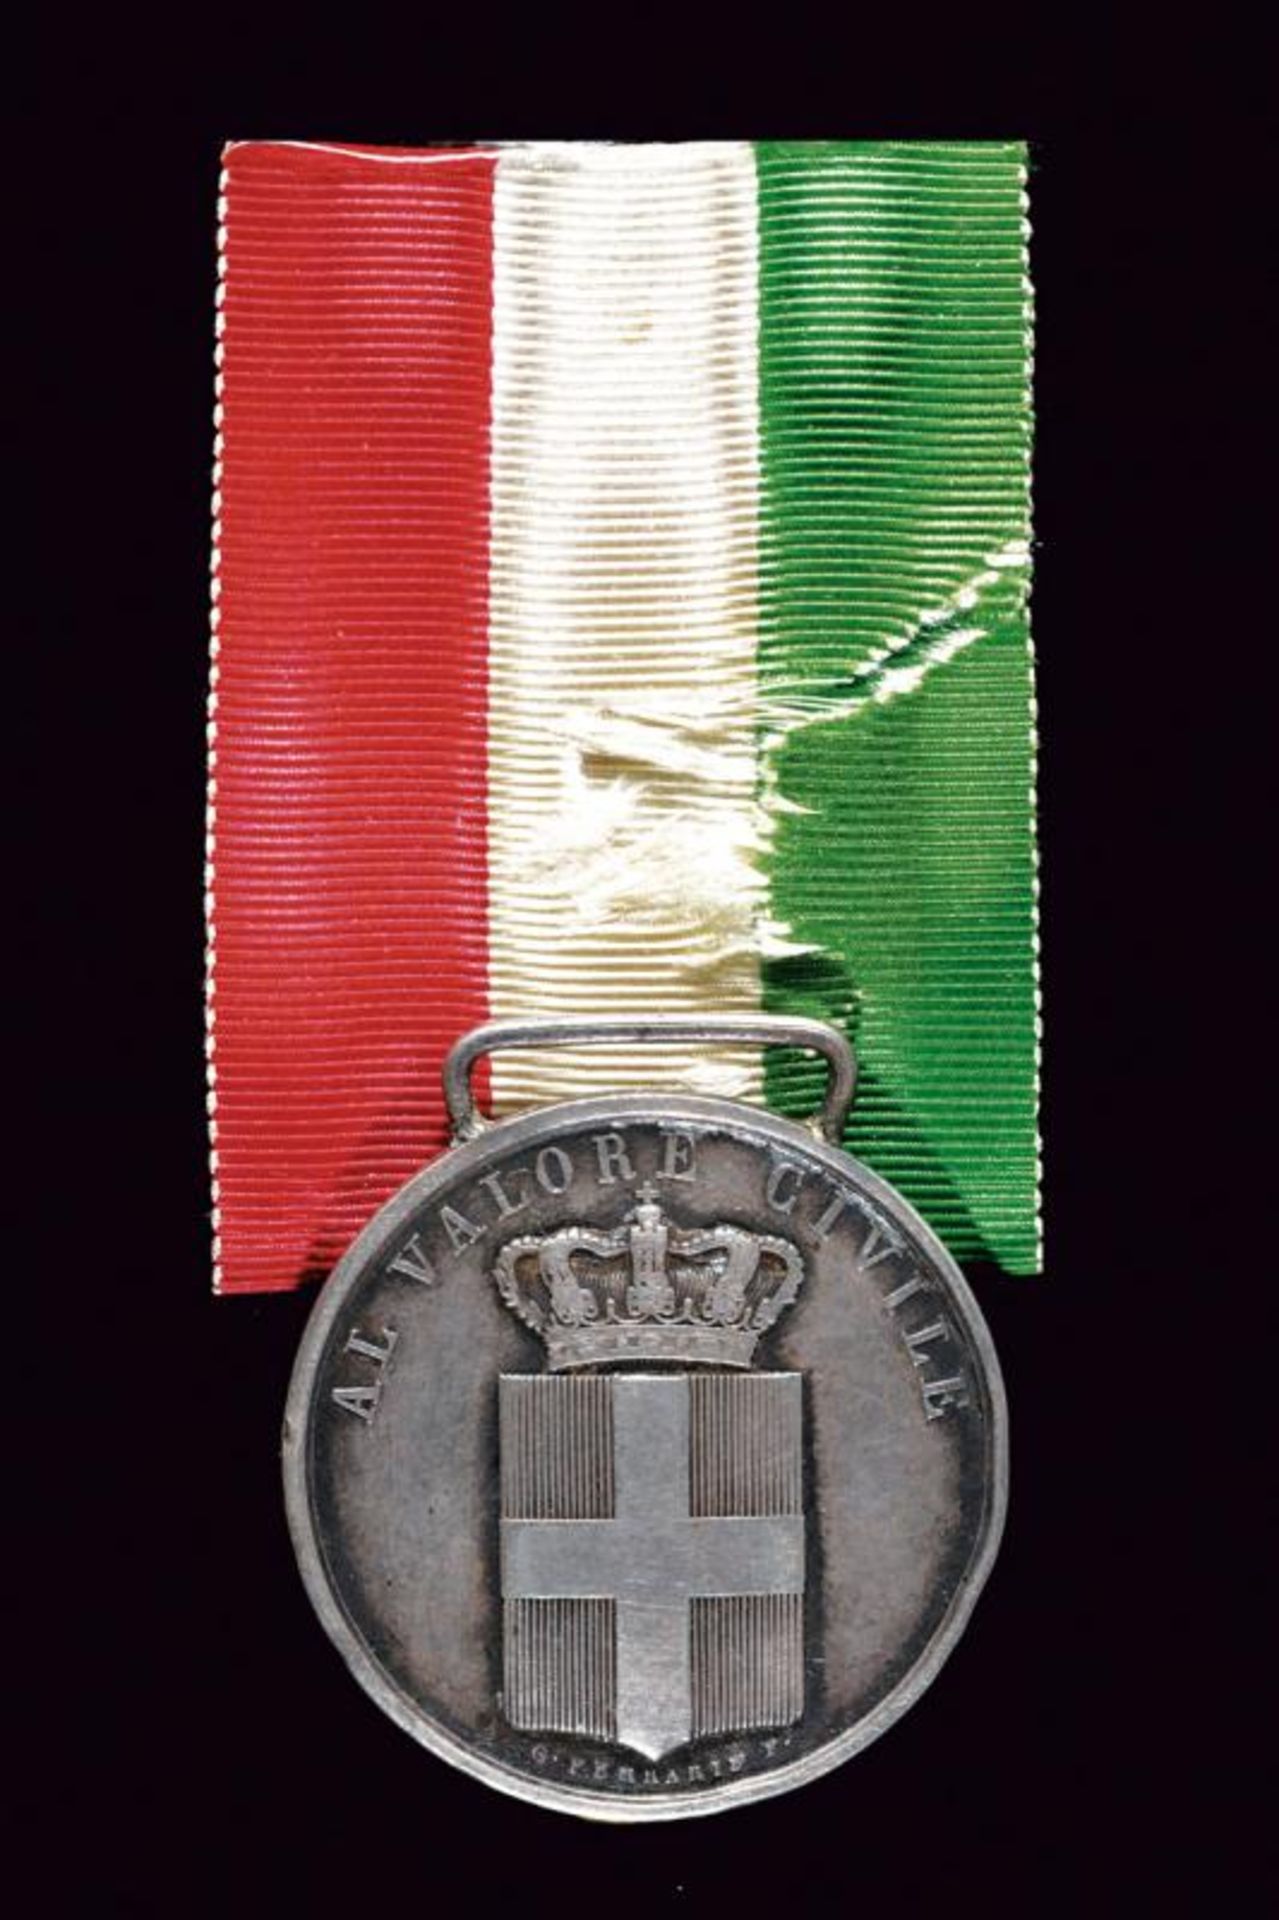 A silver medal for Civil Bravery